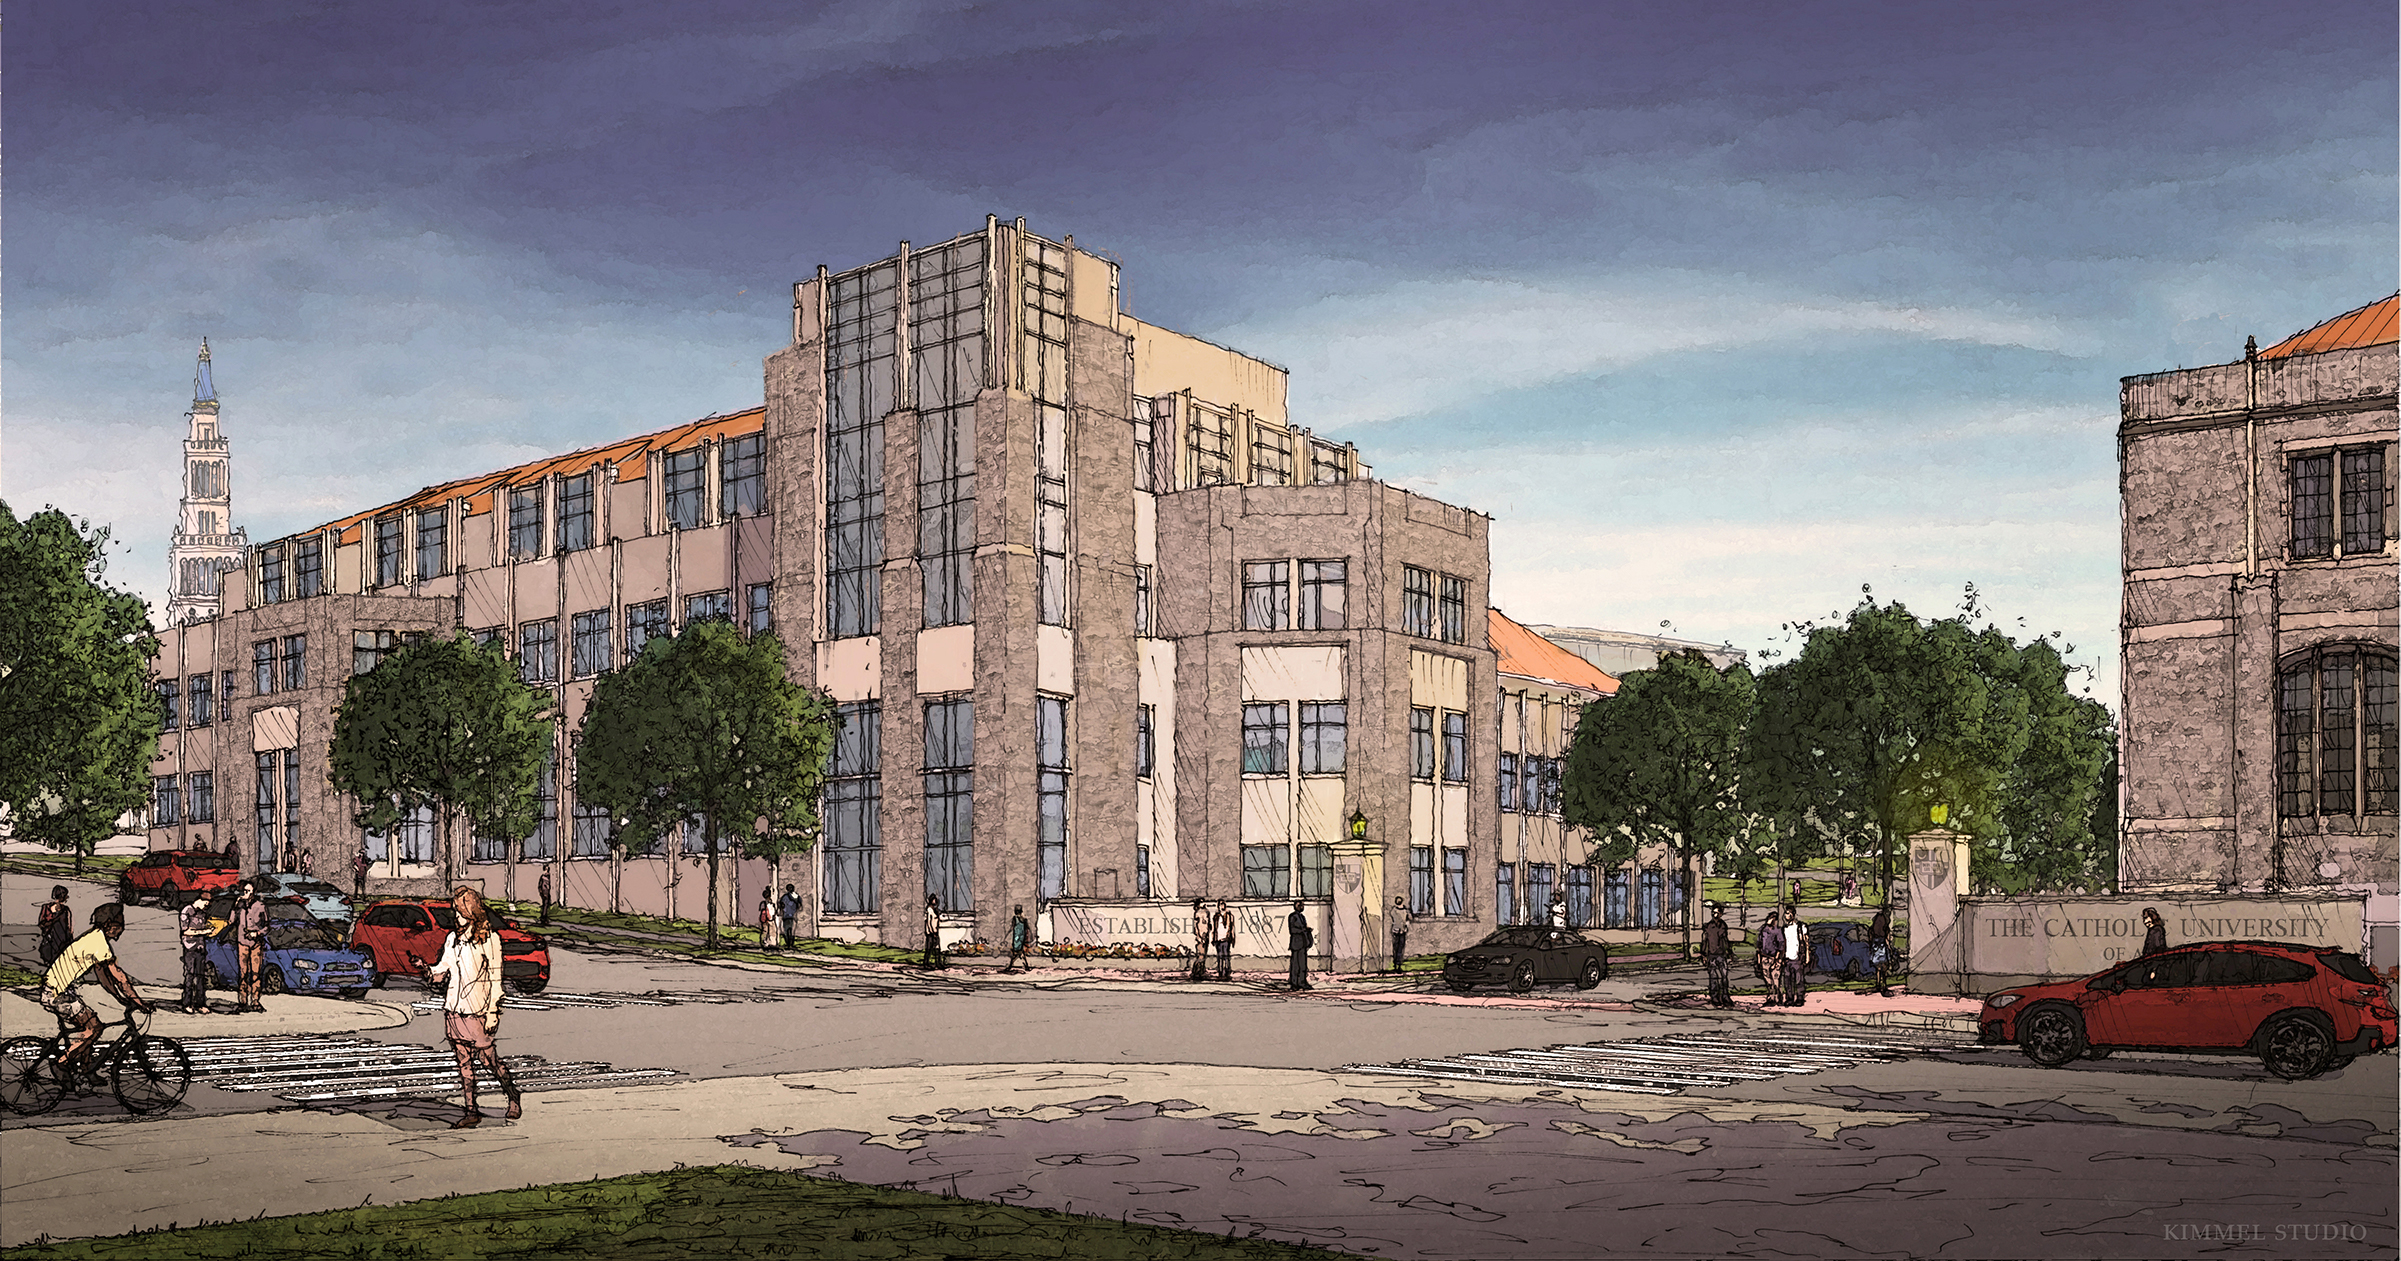 Early rendering Nursing and Sciences building